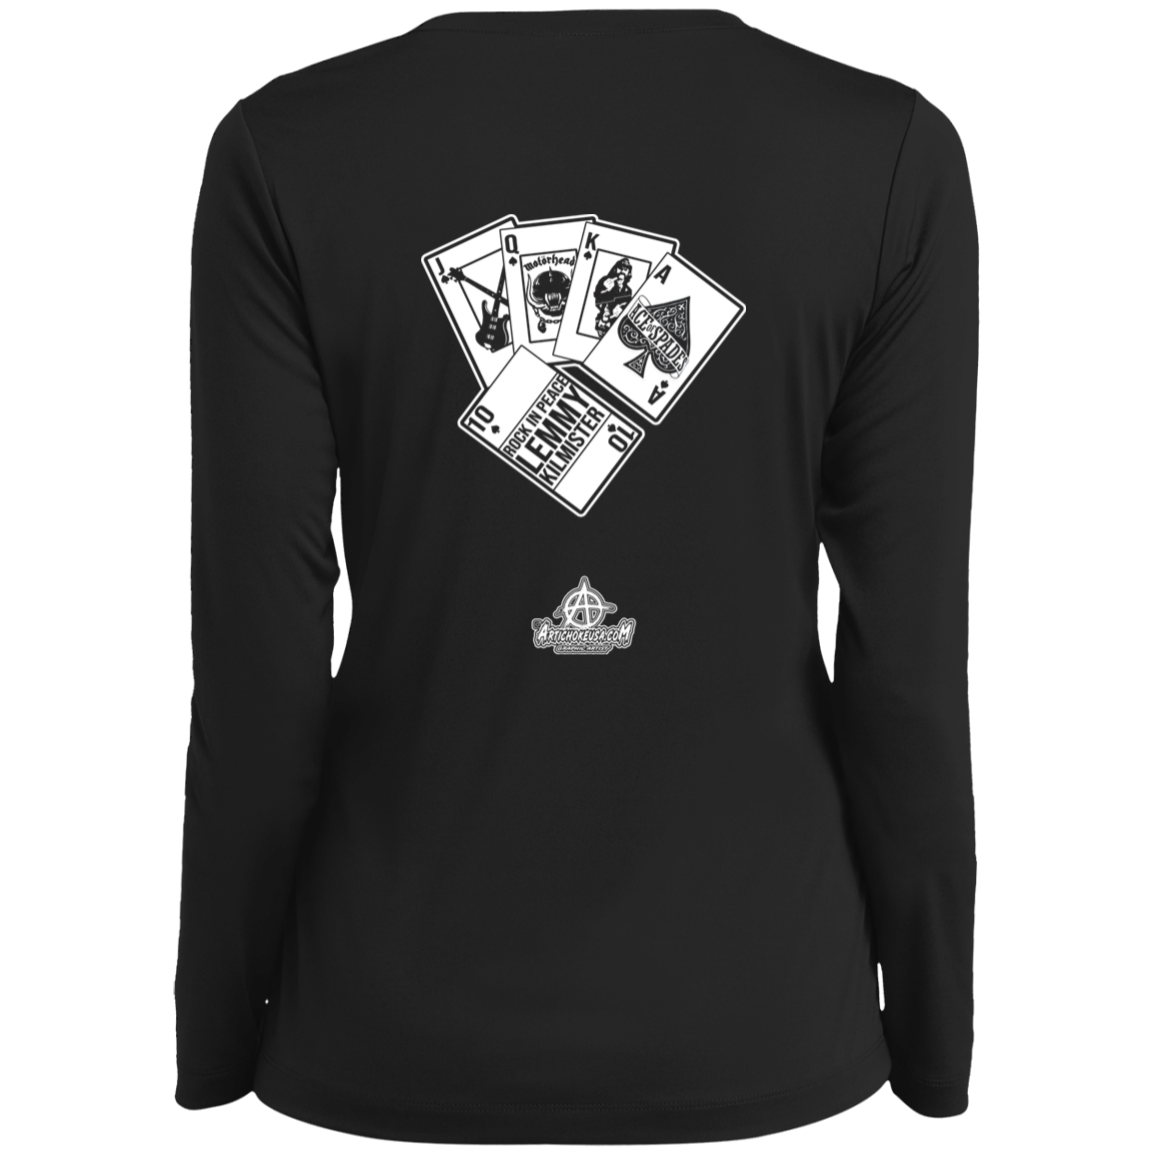 ArtichokeUSA Custom Design. Motorhead's Lemmy Kilmister's Favorite Video Poker Machine. Rock in Peace! Ladies’ Long Sleeve Performance V-Neck Tee